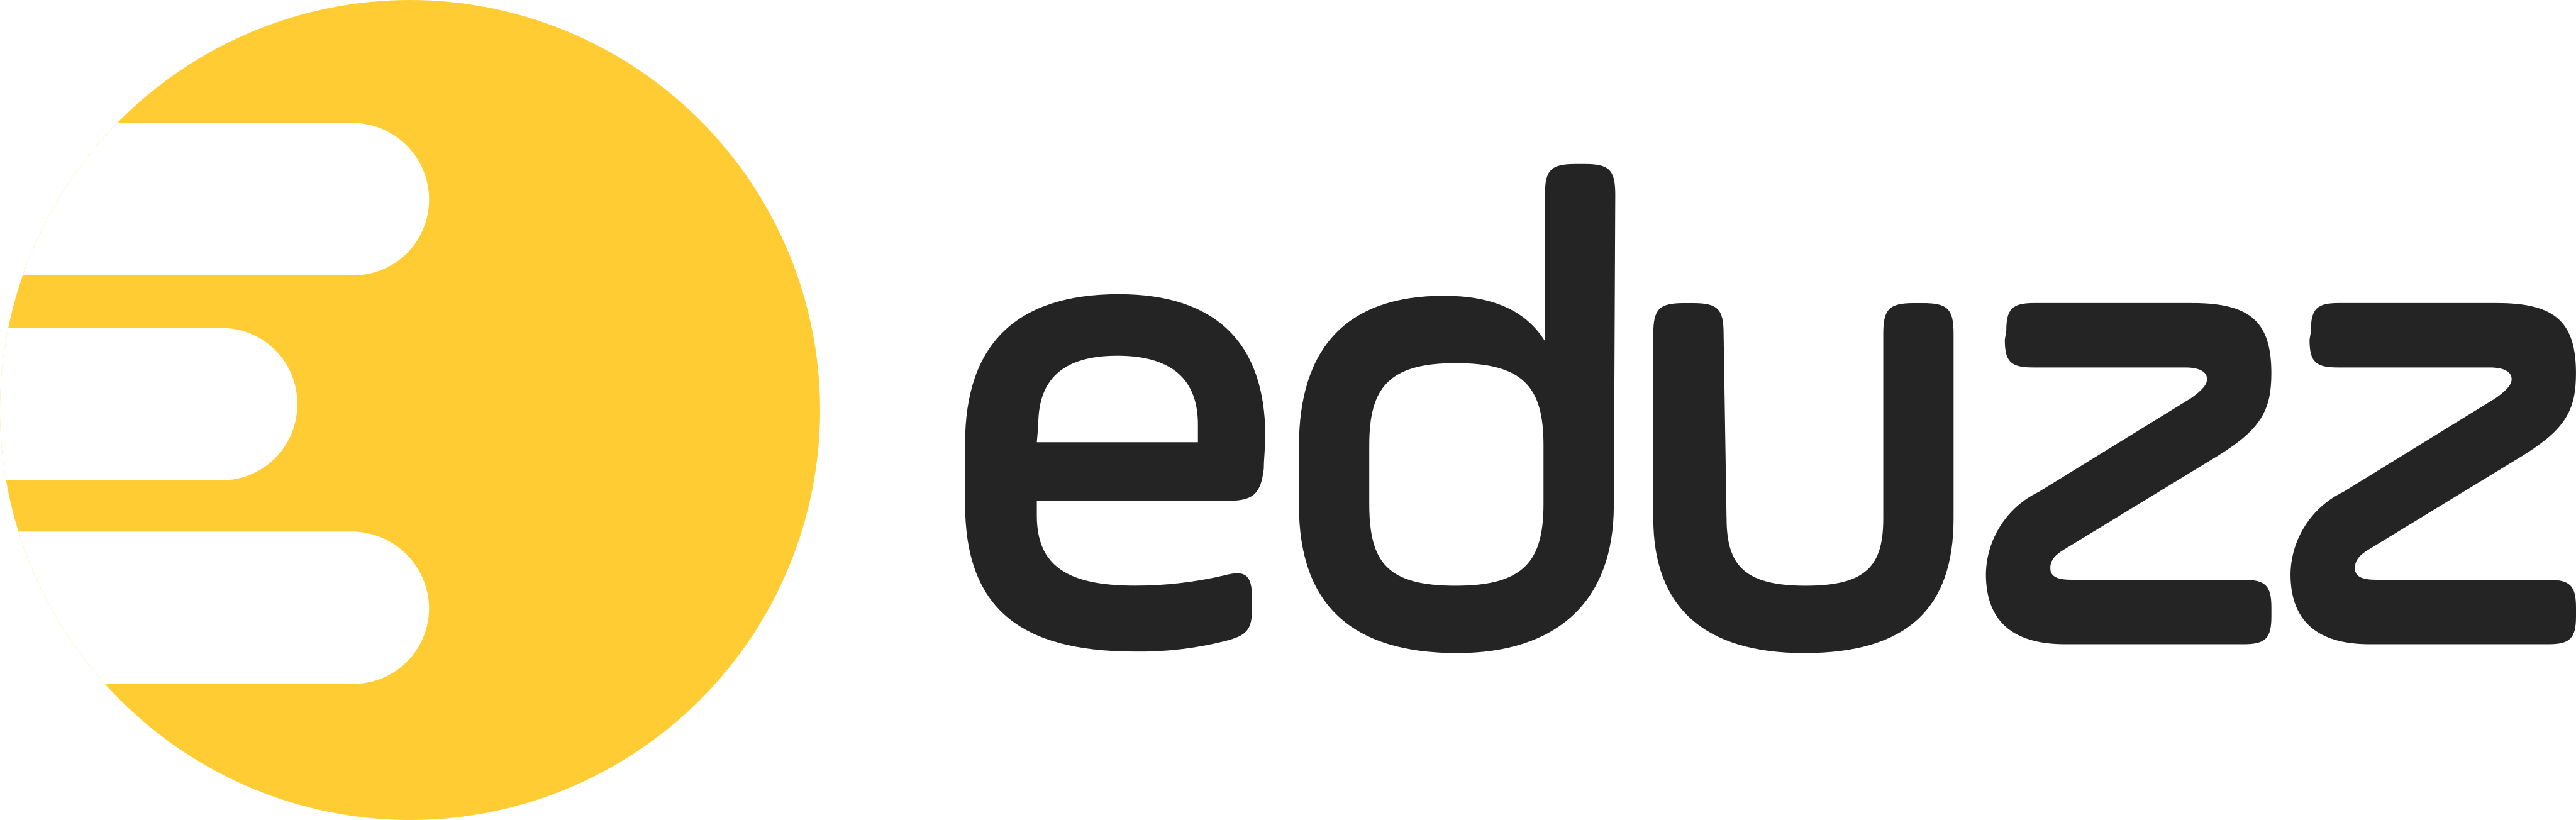 eduzz-logo